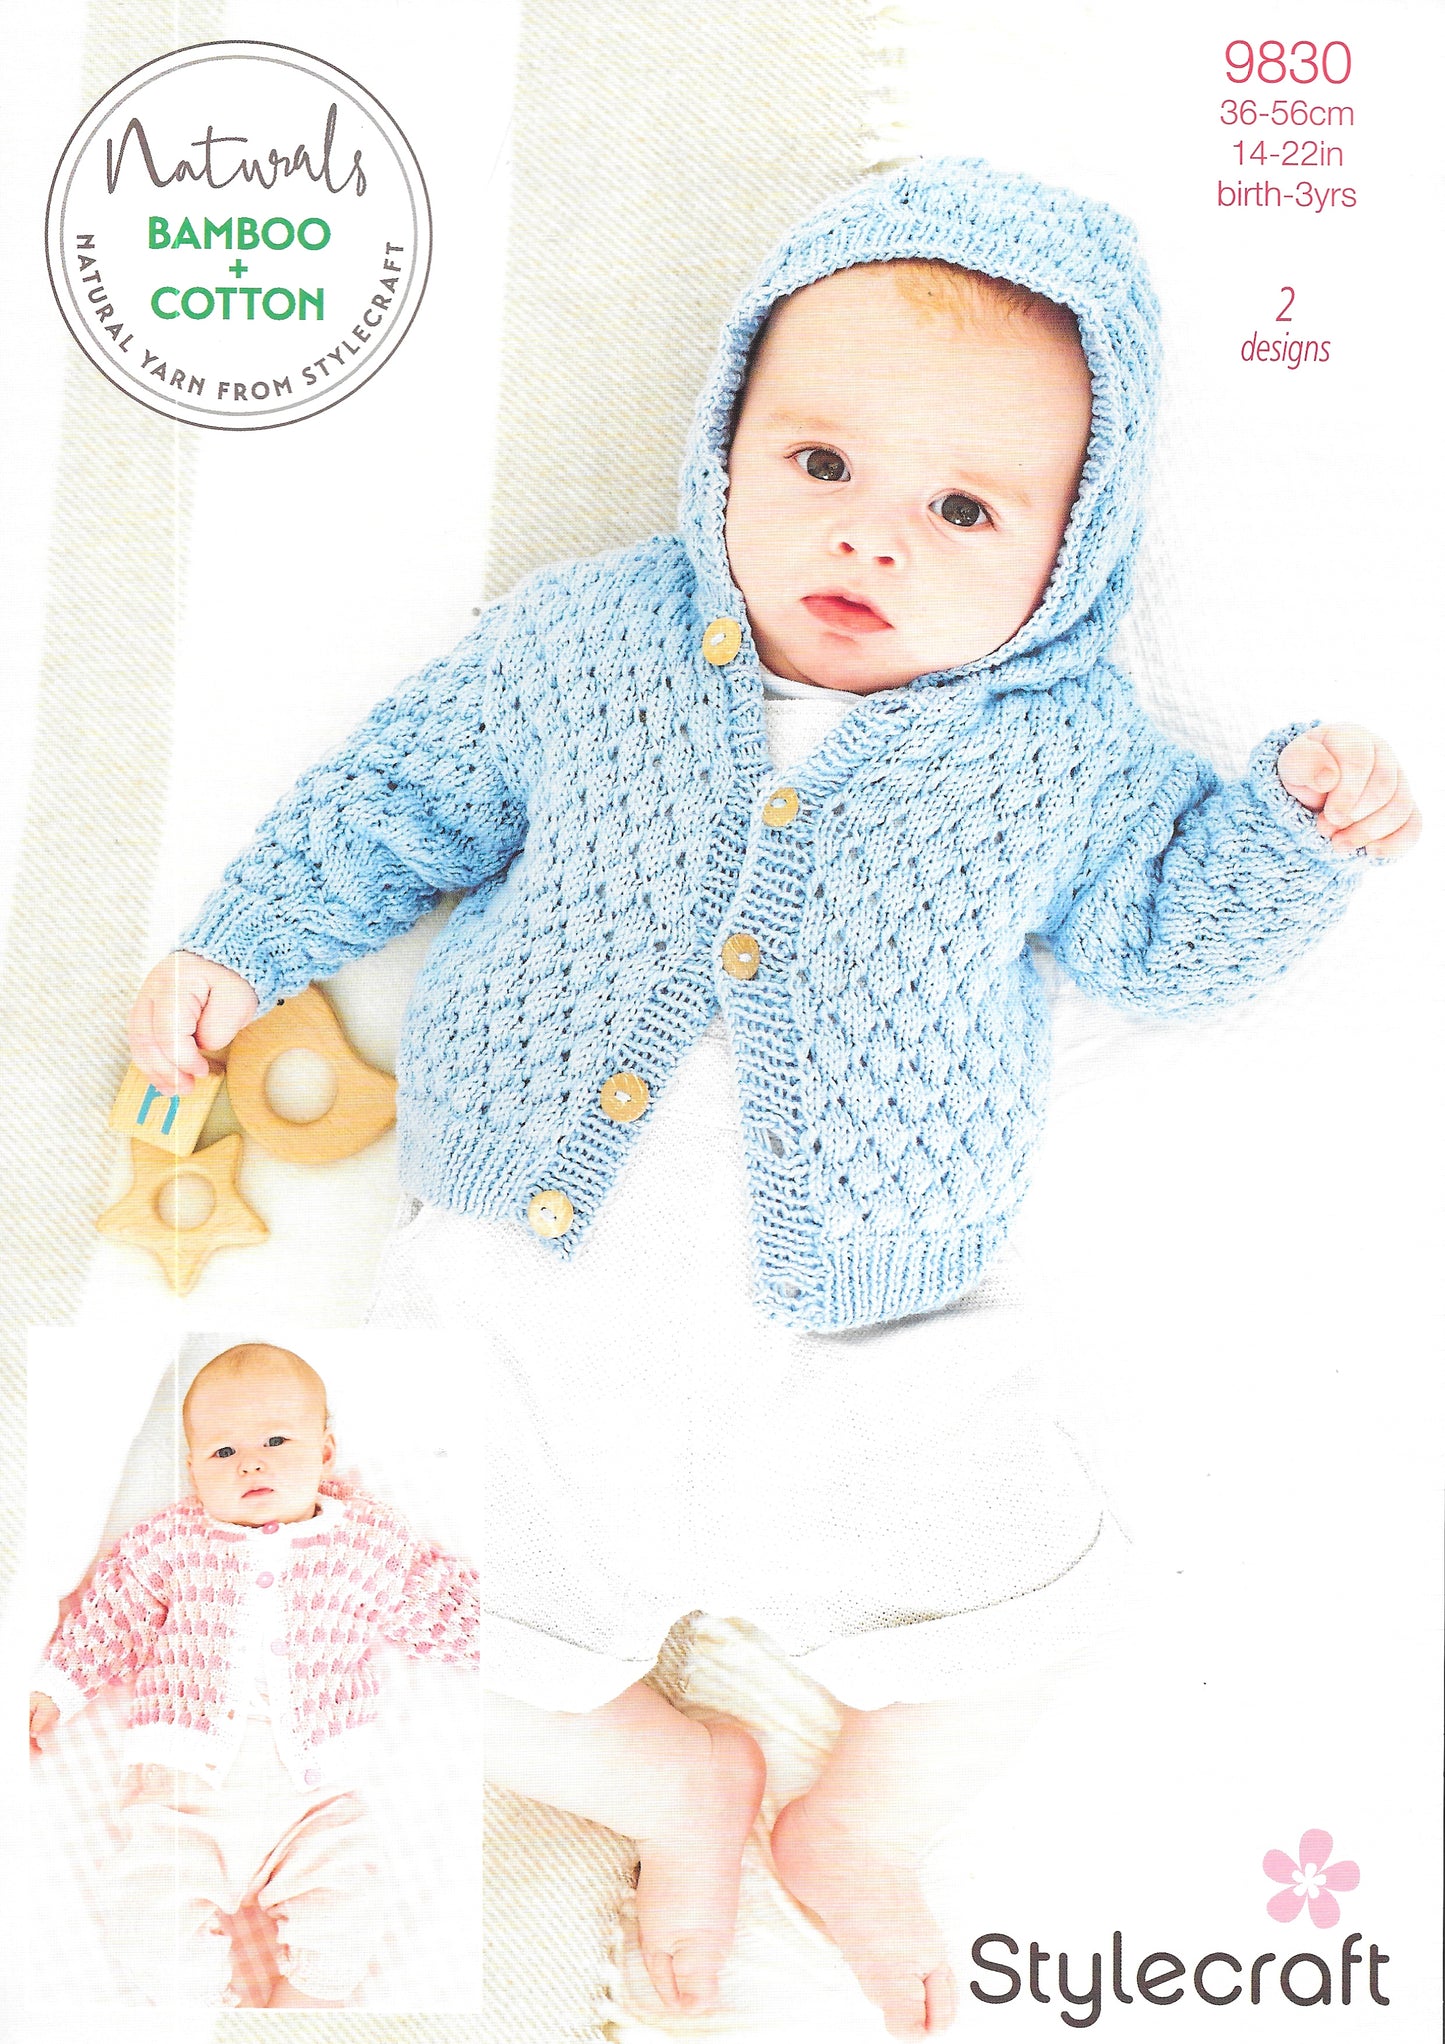 9830 Stylecraft knitting pattern. Child's Cardigans. Double Knitting